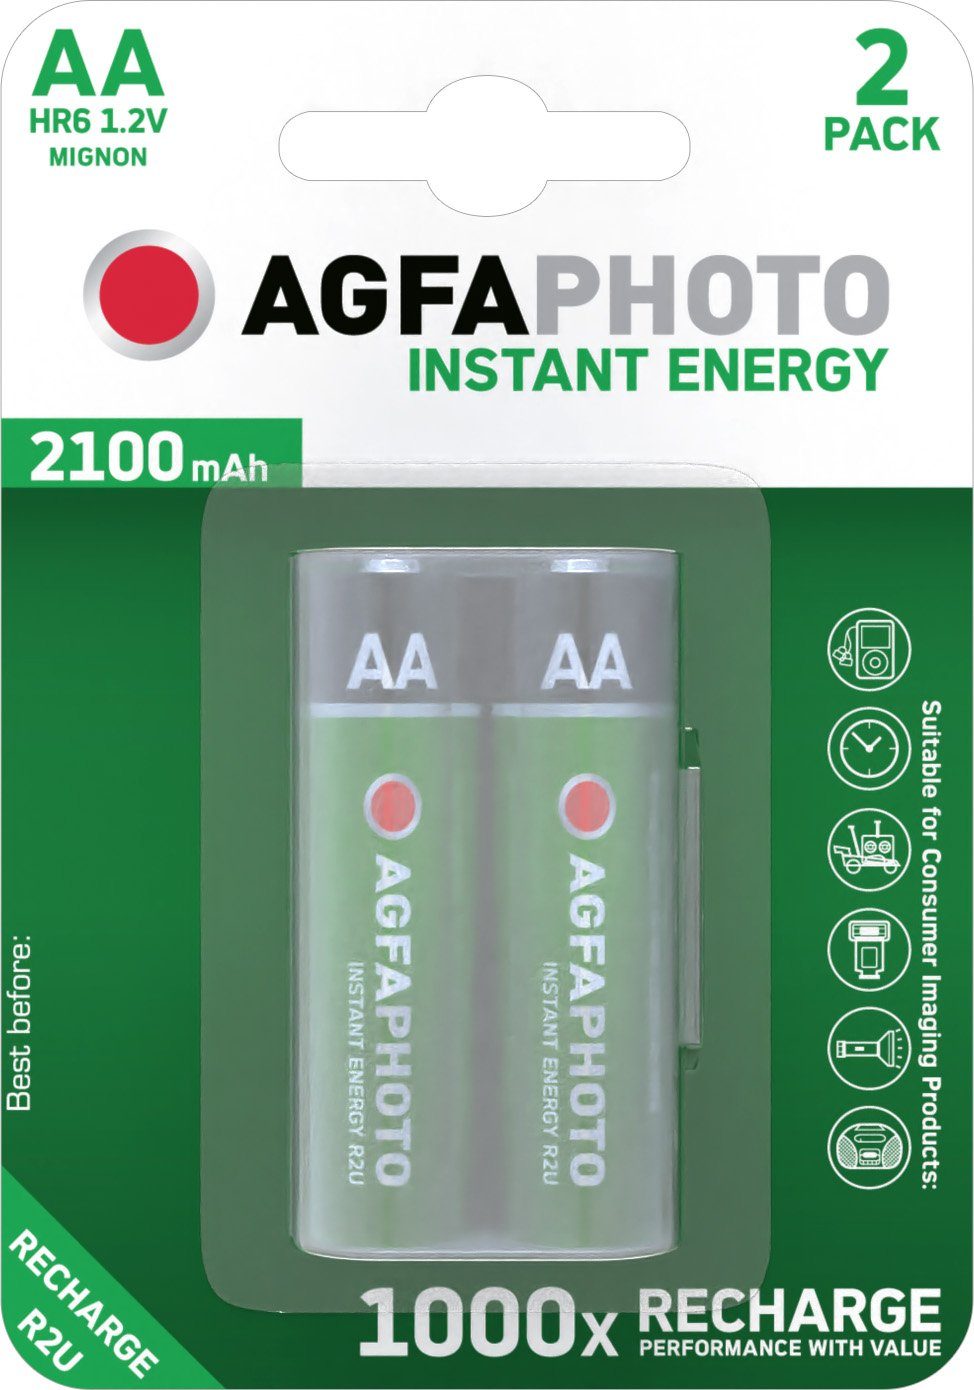 AgfaPhoto 2er Akku Instant (2 Pack Mignon Mignon/AA/HR06 1.2V/2100mAh Energy St)